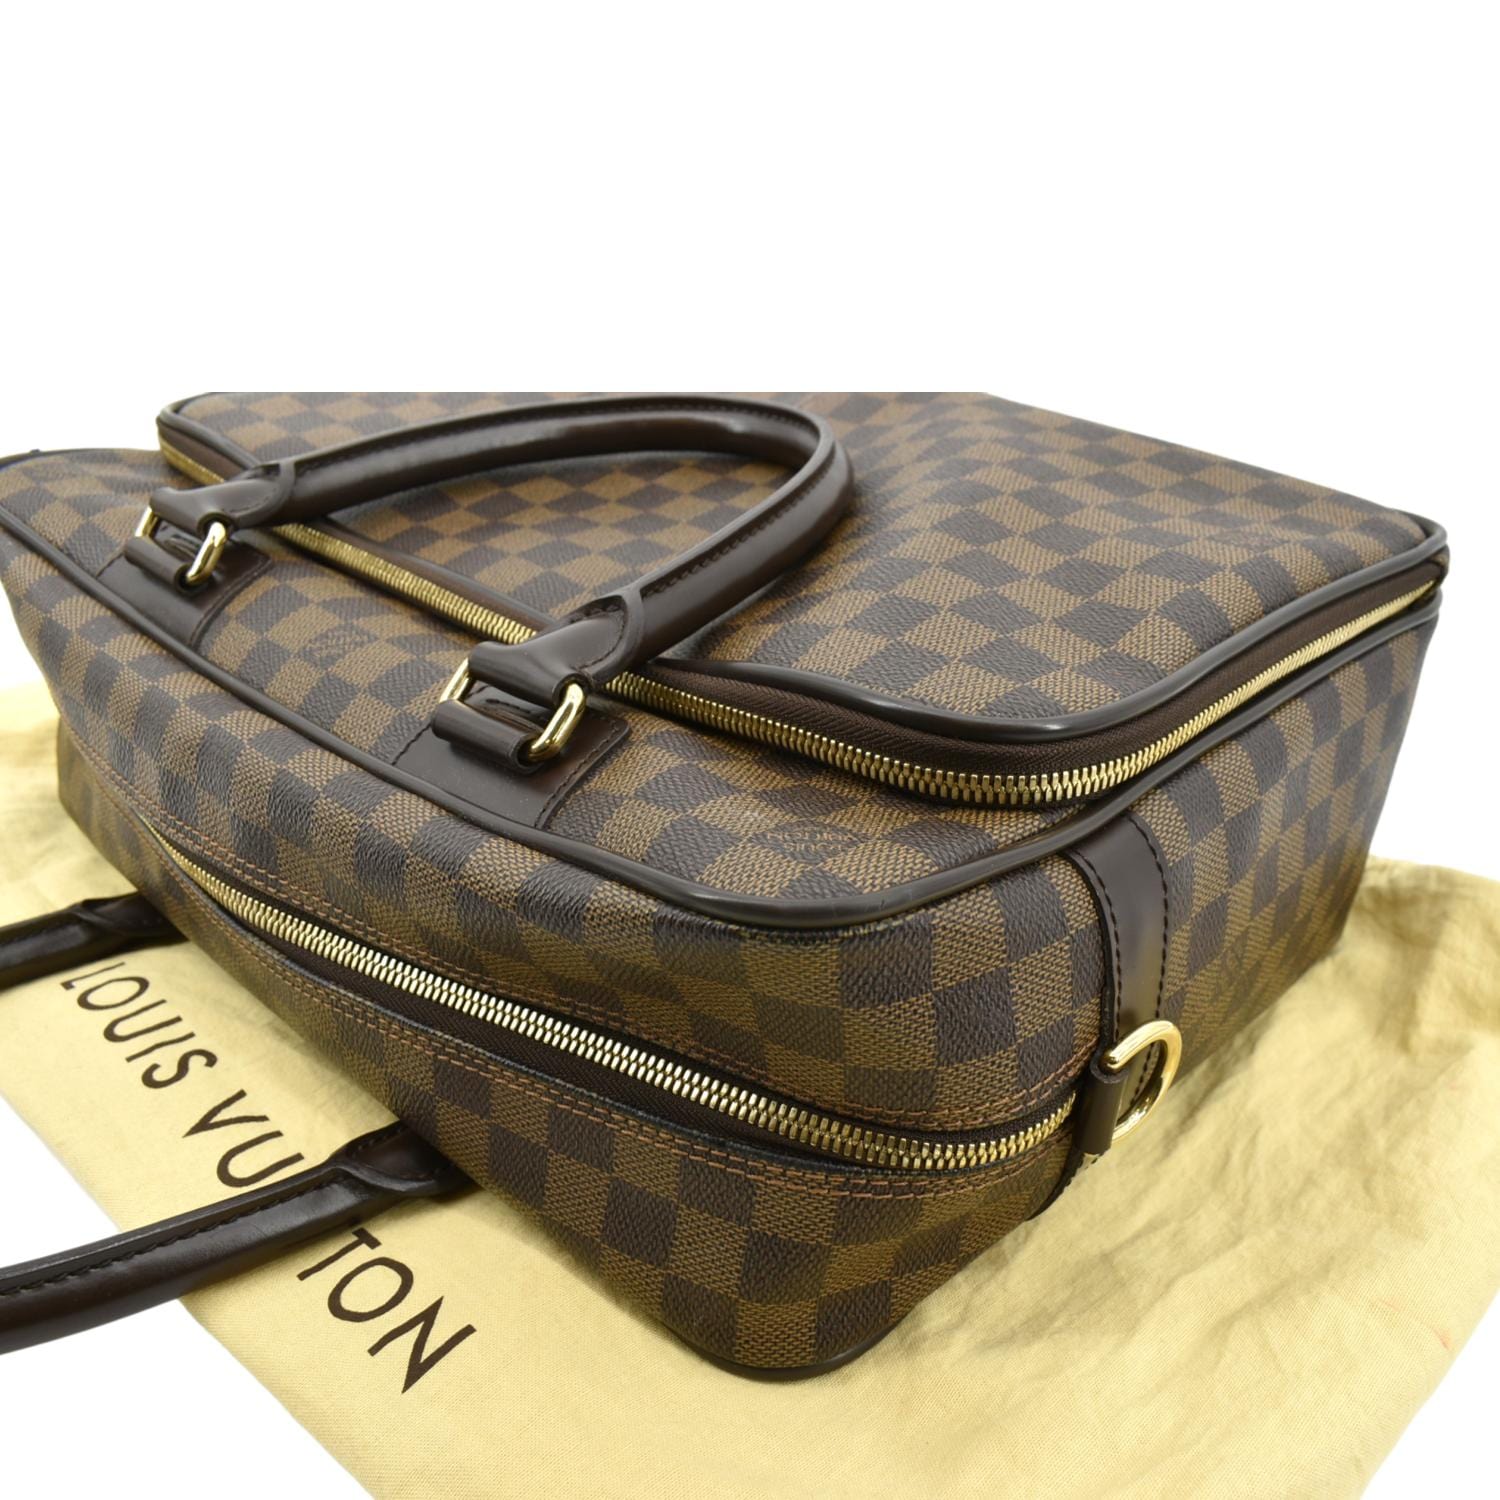 Louis Vuitton Icare Laptop Bag Damier